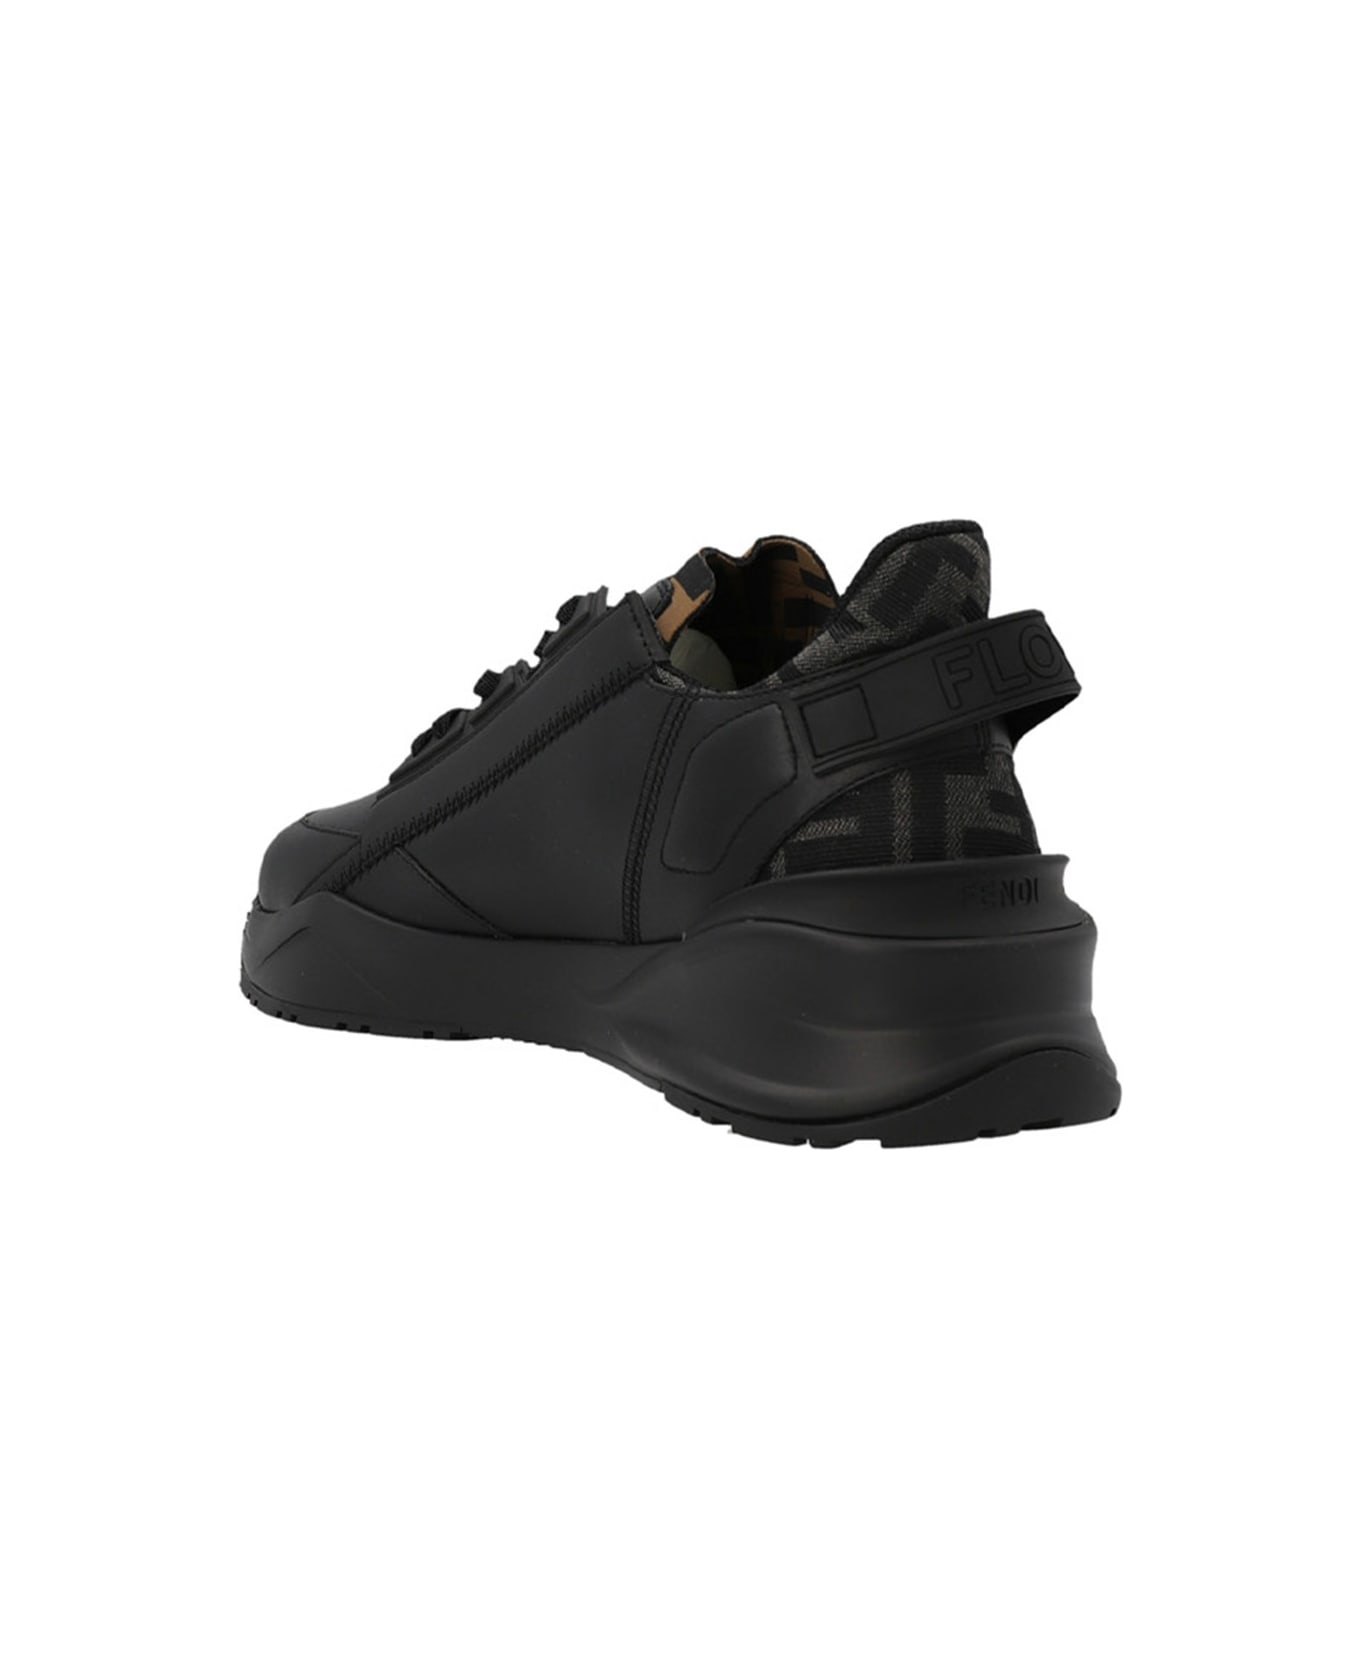 Fendi Flow Leather Sneakers - Black